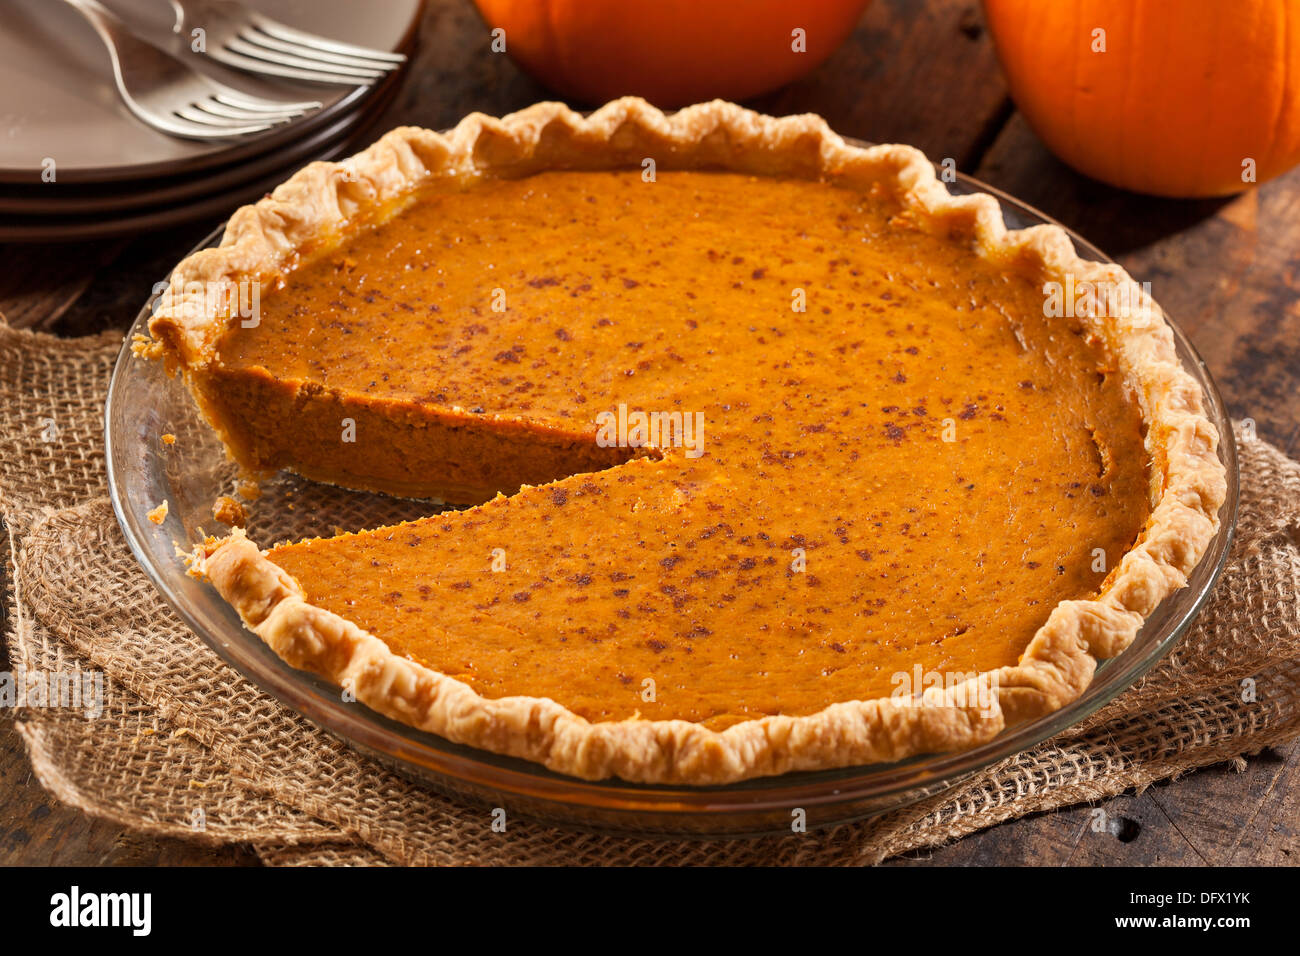 Homemade Delicious Pumpkin Pie made for Thanksgiving Stock Photo